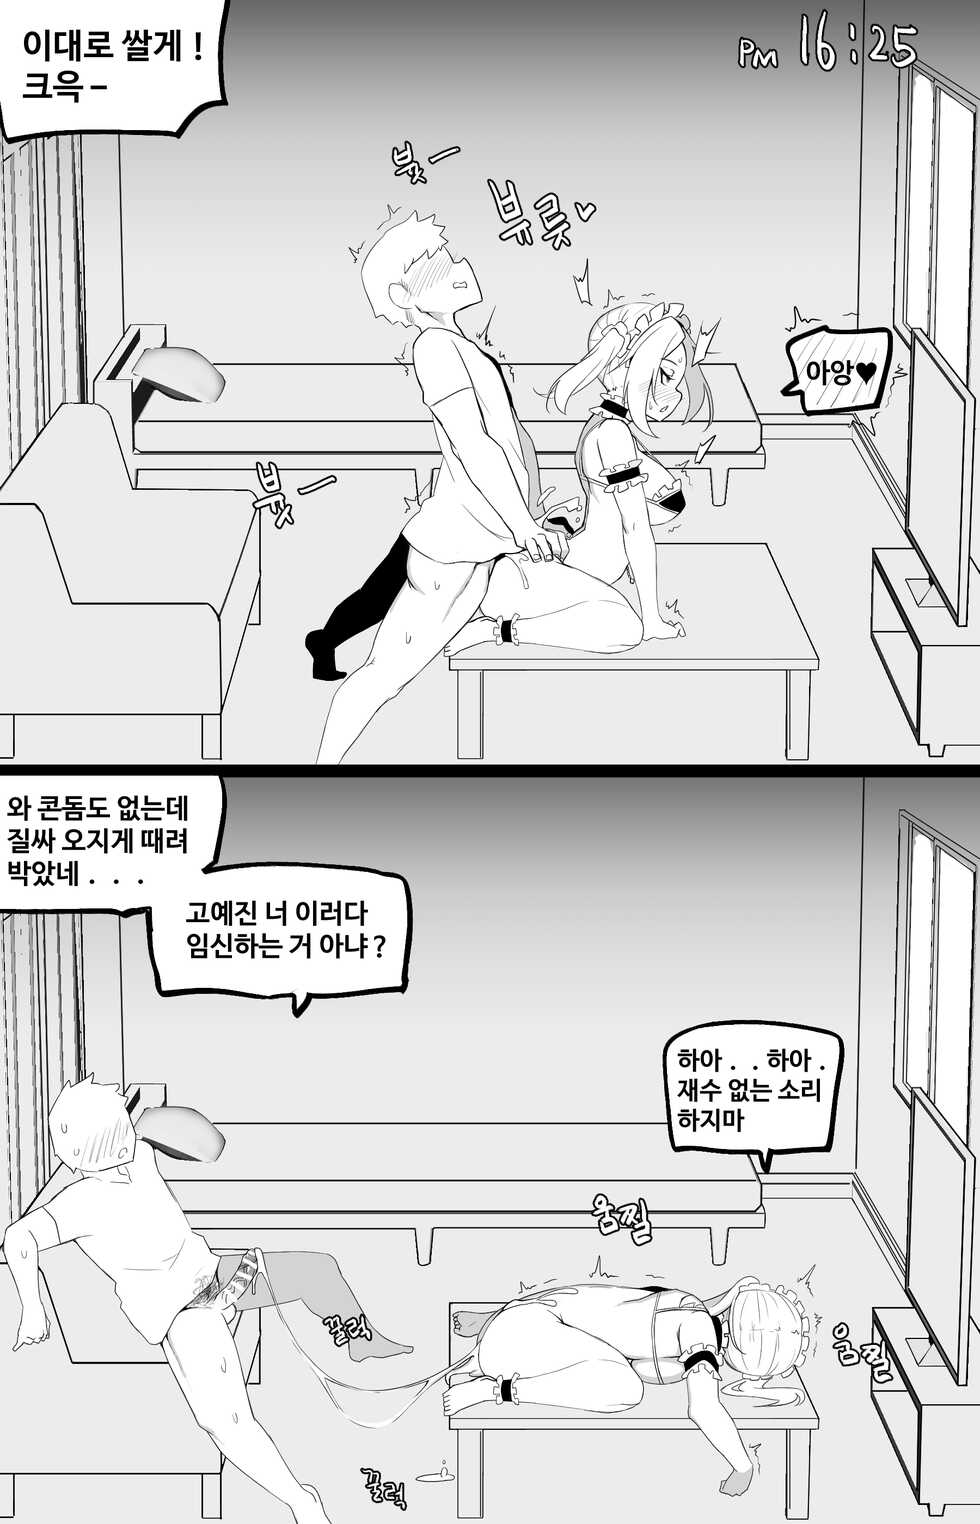 (mangmoongming)세상에서 가장 빠꾸 없는 남여사친(pixiv) - Page 20